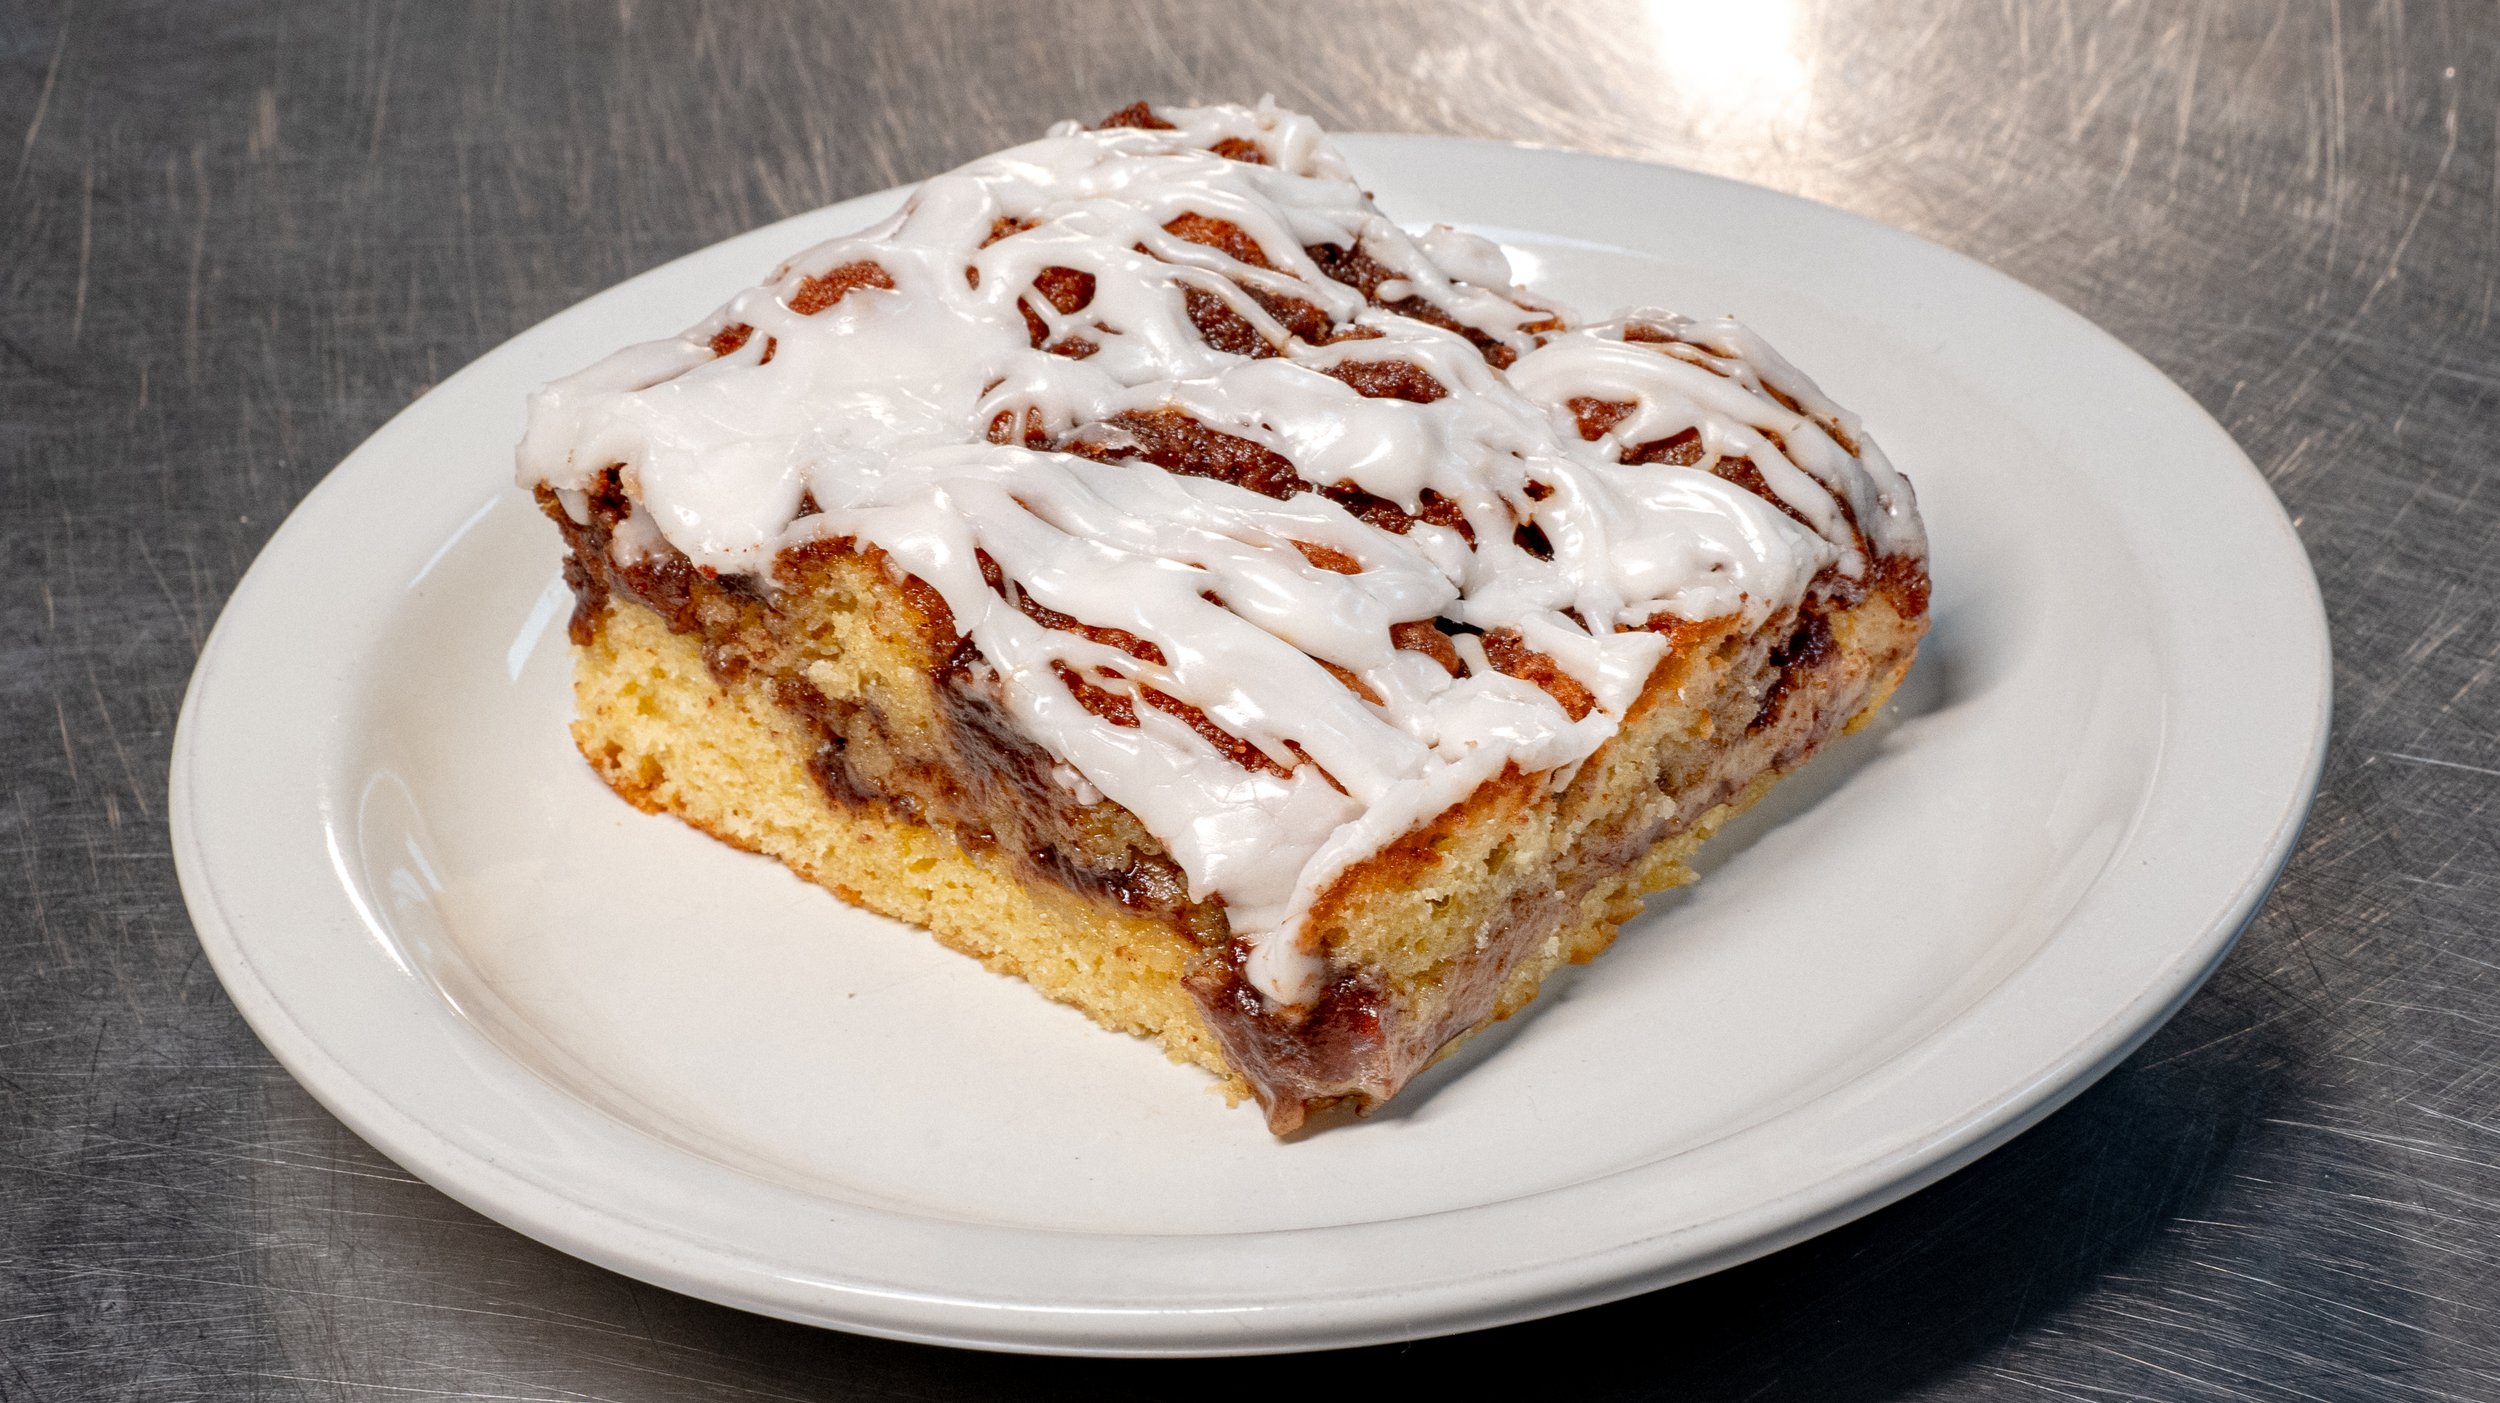 Cinnamon Streusel Cake Dessert Country Cafe.jpg